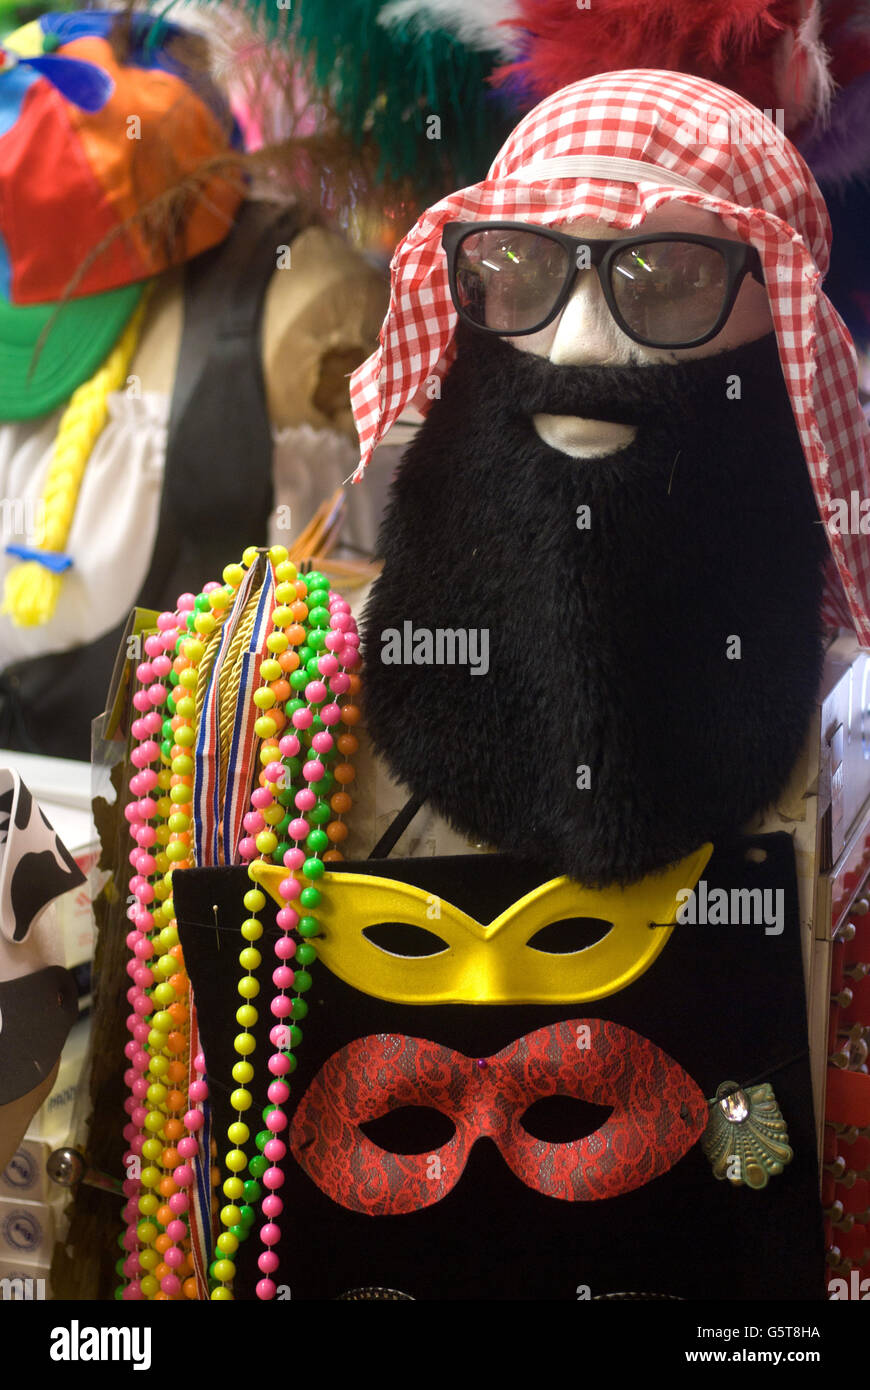 Joke shop with arab head dress and beard Stock Photo